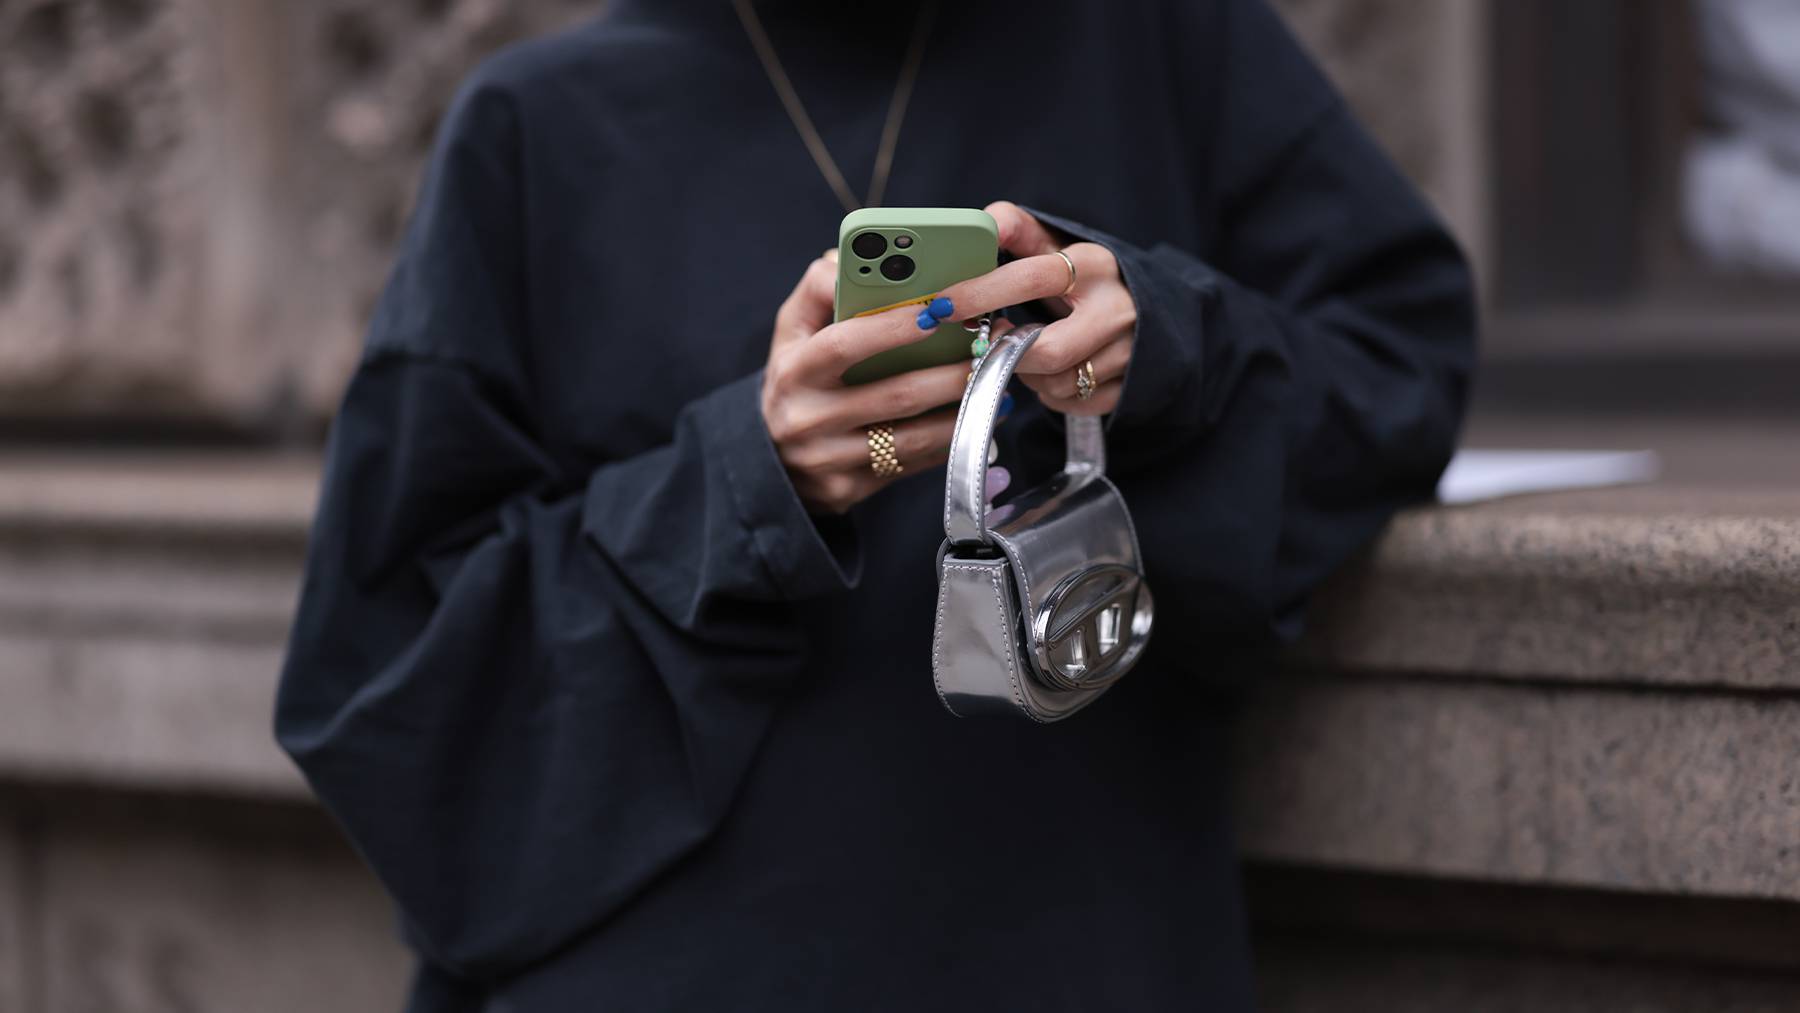 Customer holding a microbag and mobile phone.